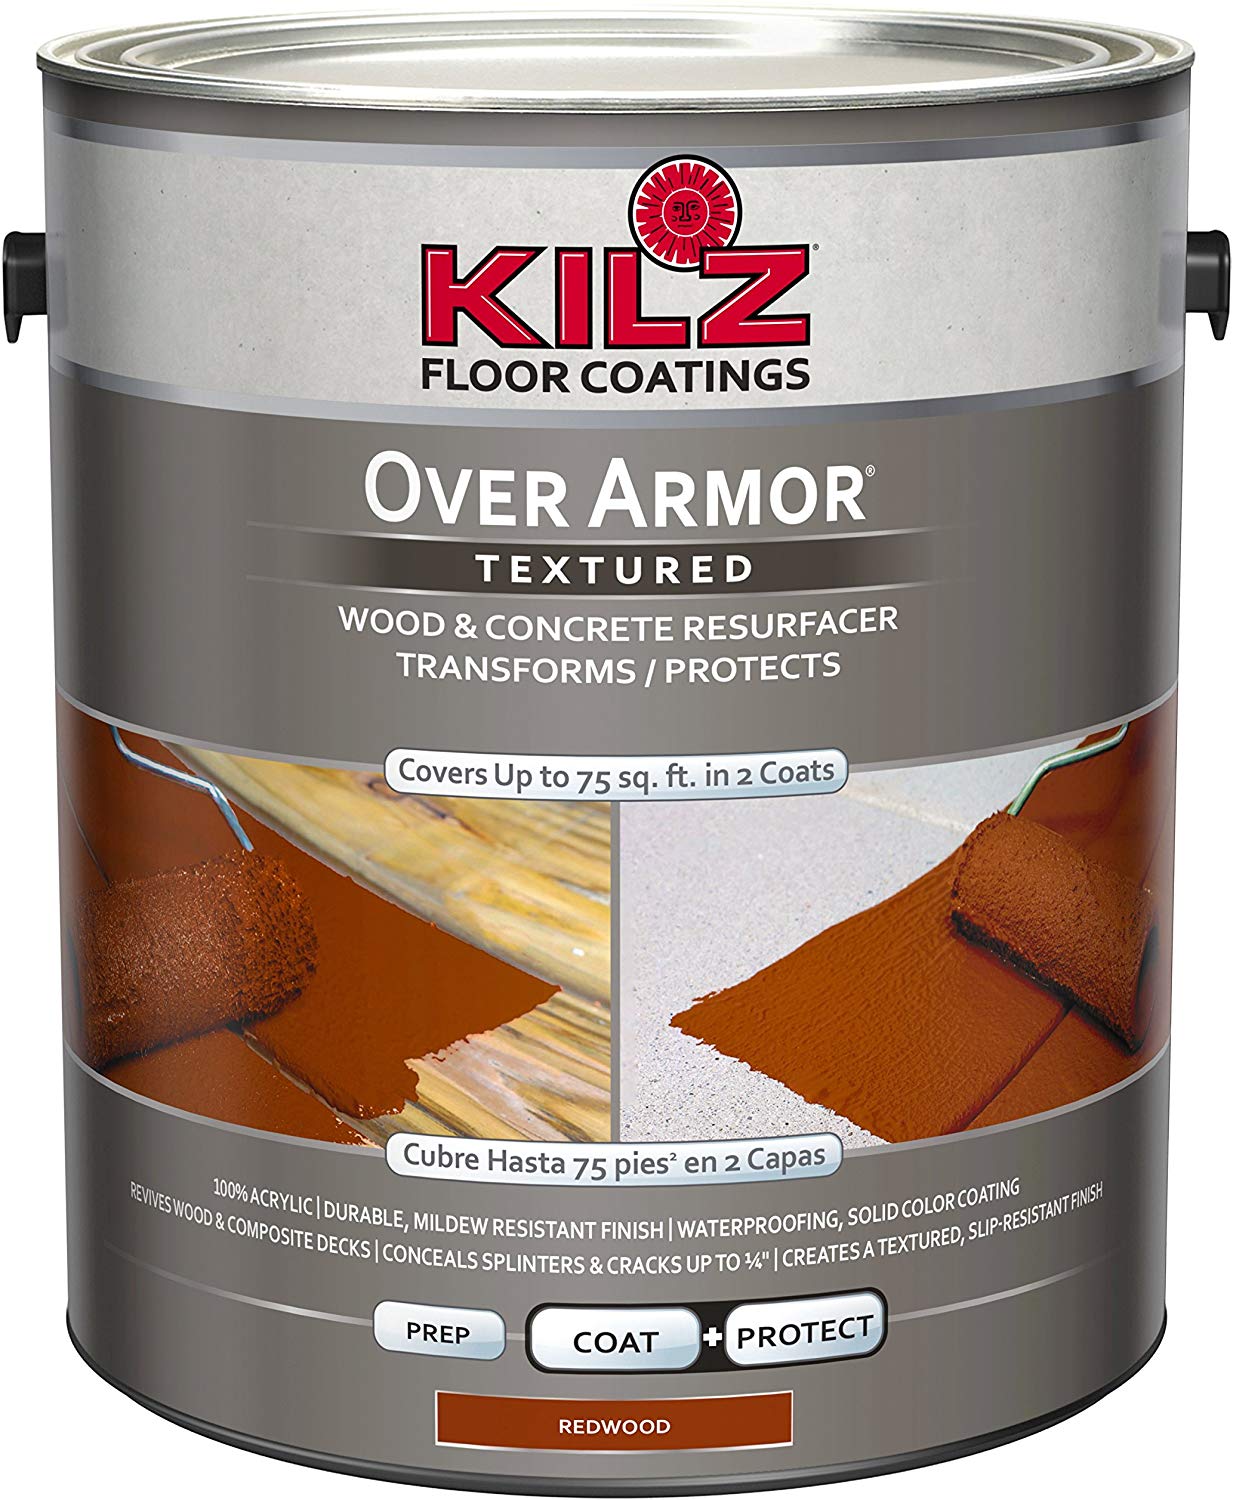 KILZ Over Armor Textured Wood/Concrete review